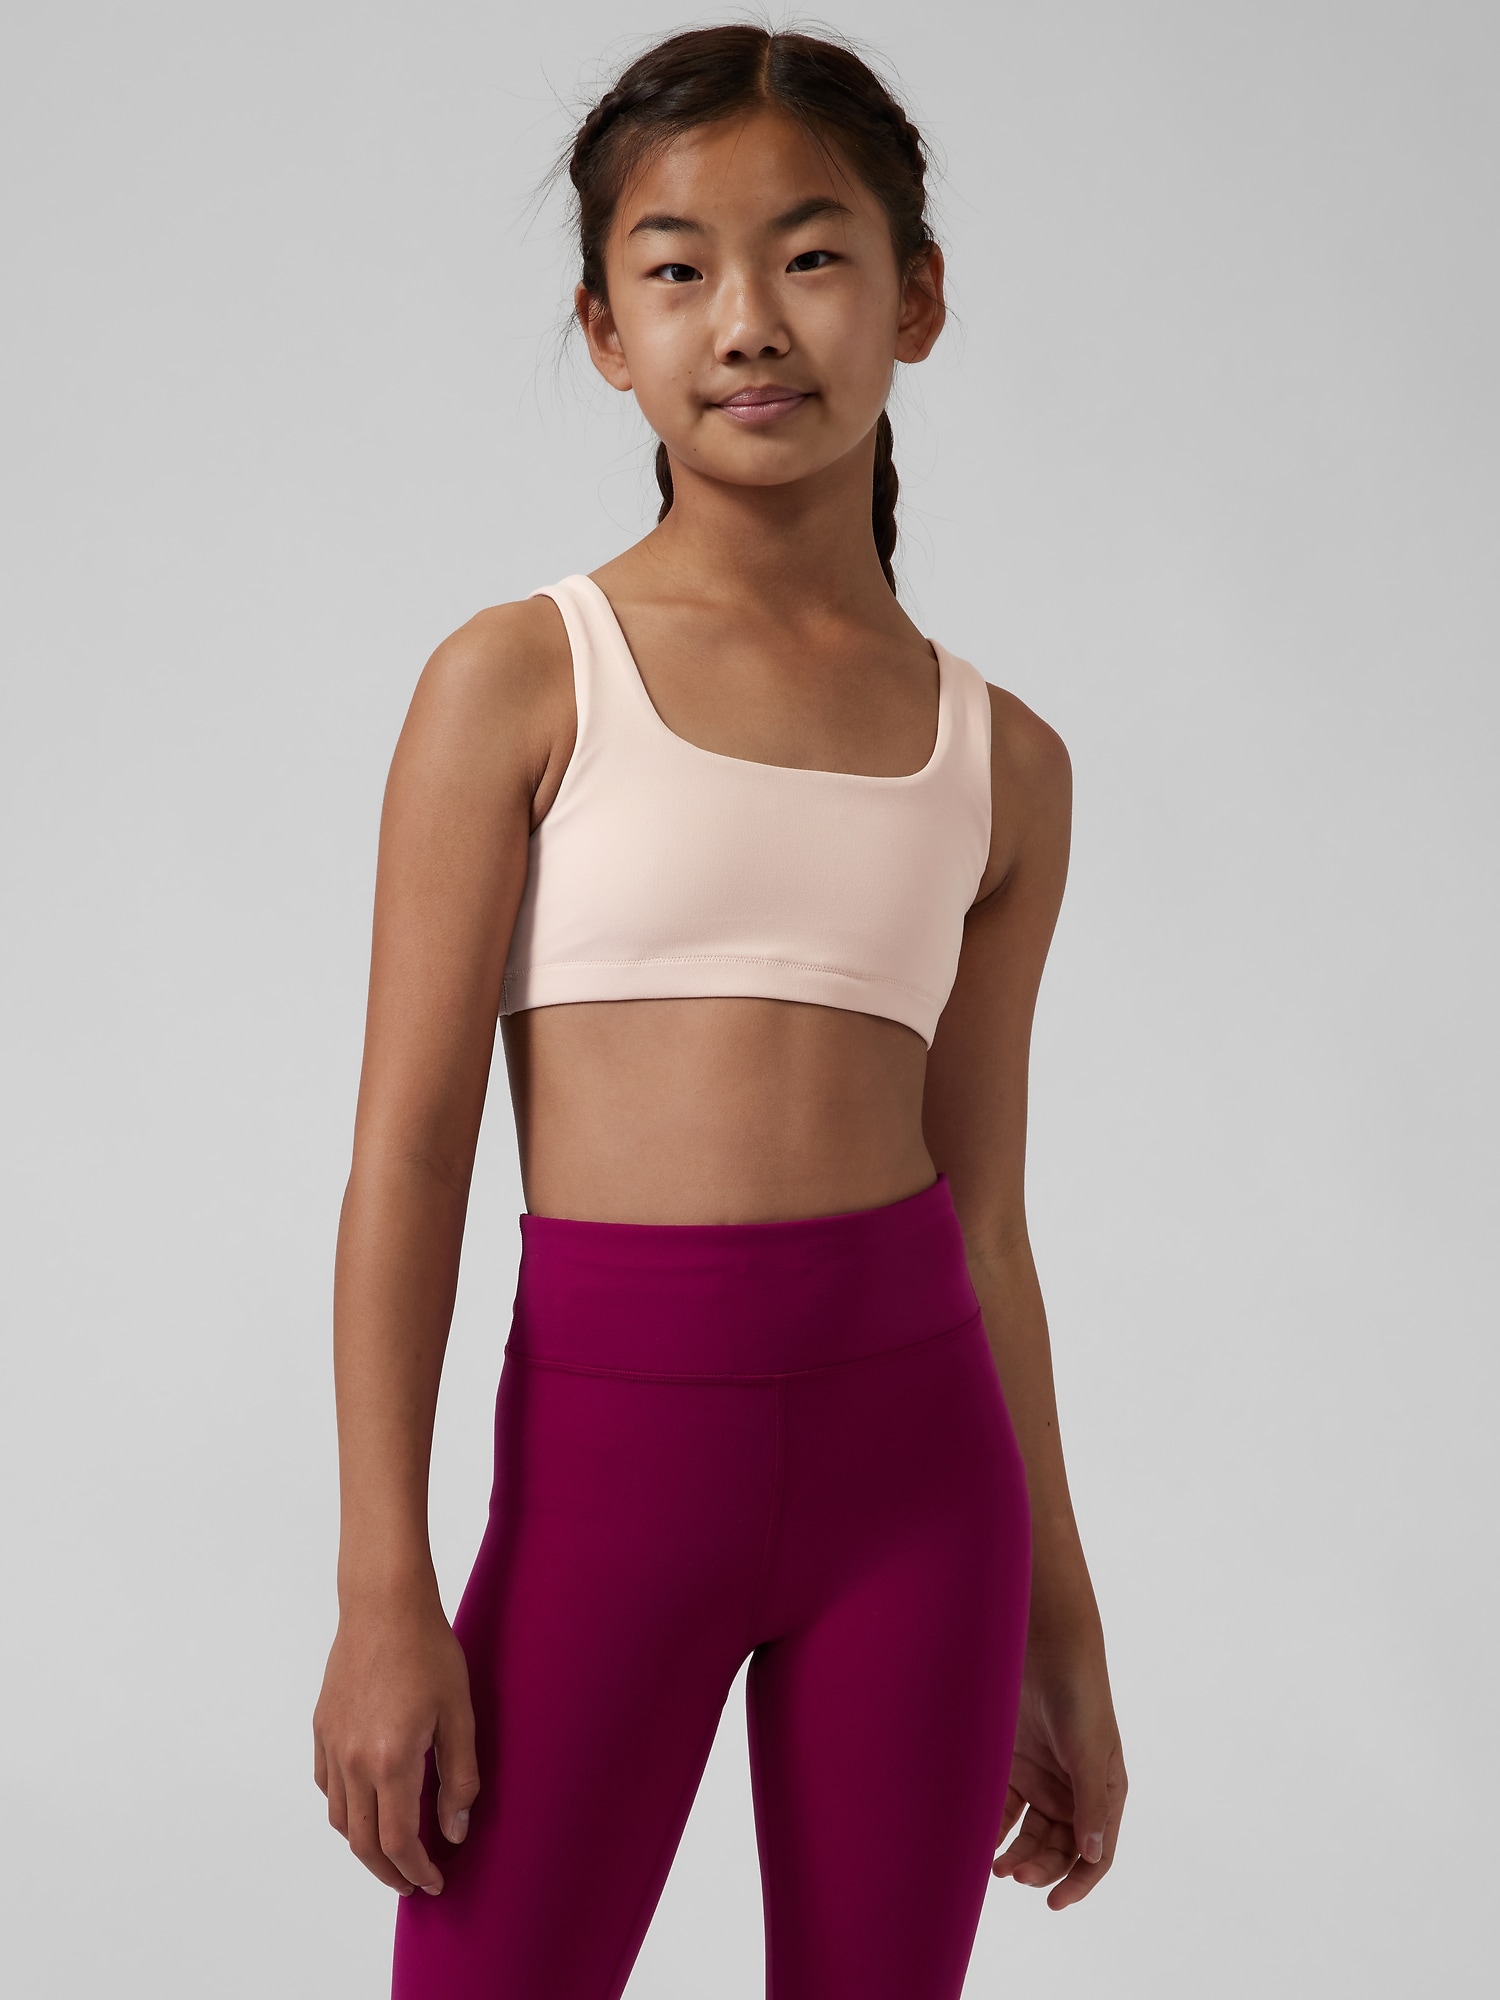 Square Neckline Yoga Bra Sports Padded Top Shockproof Running Vest